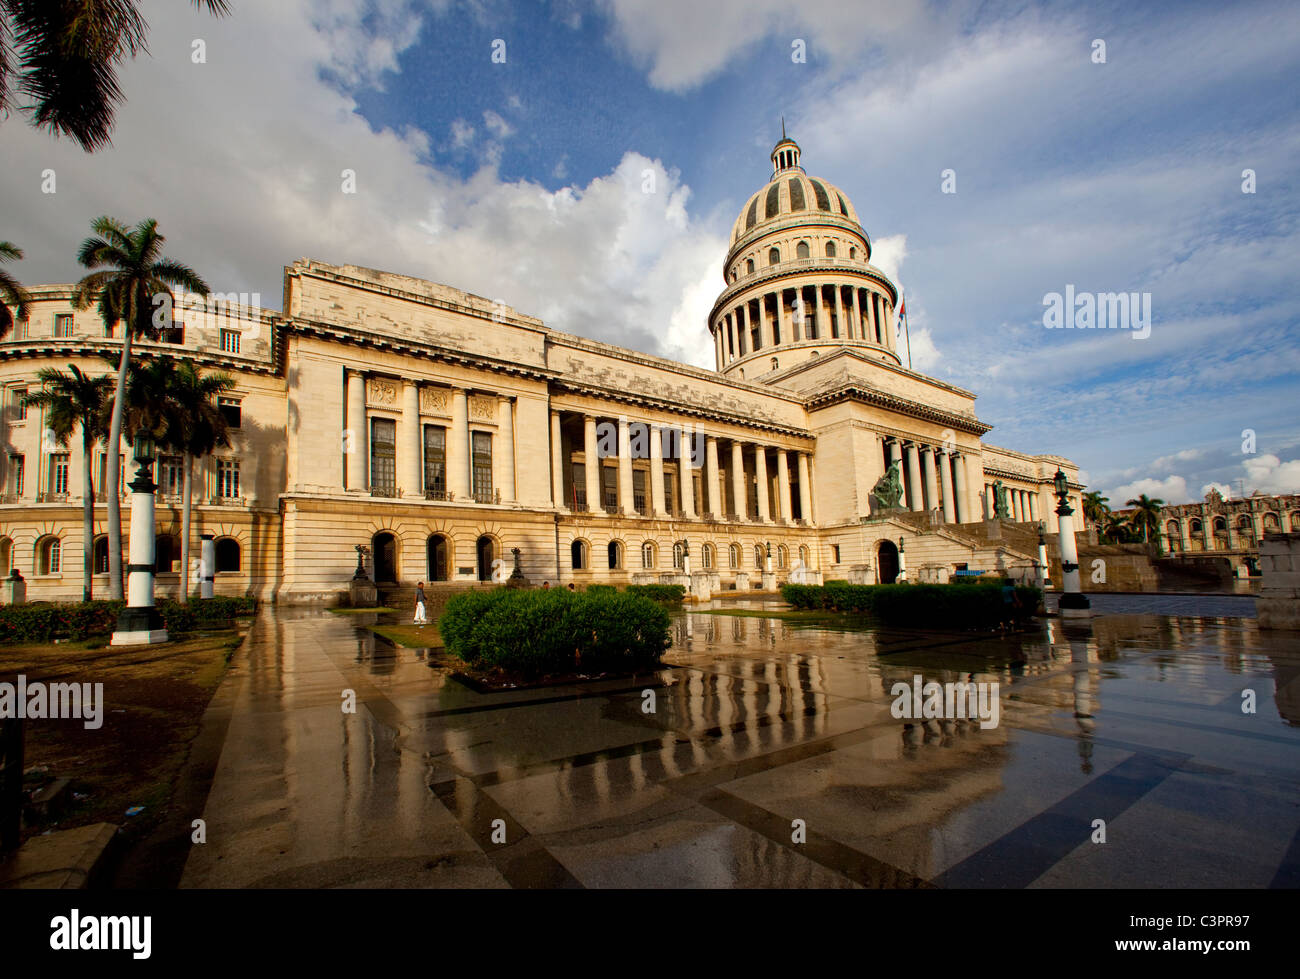 The capital building in Havana, Cuba after a rainstorm. Stock Photo